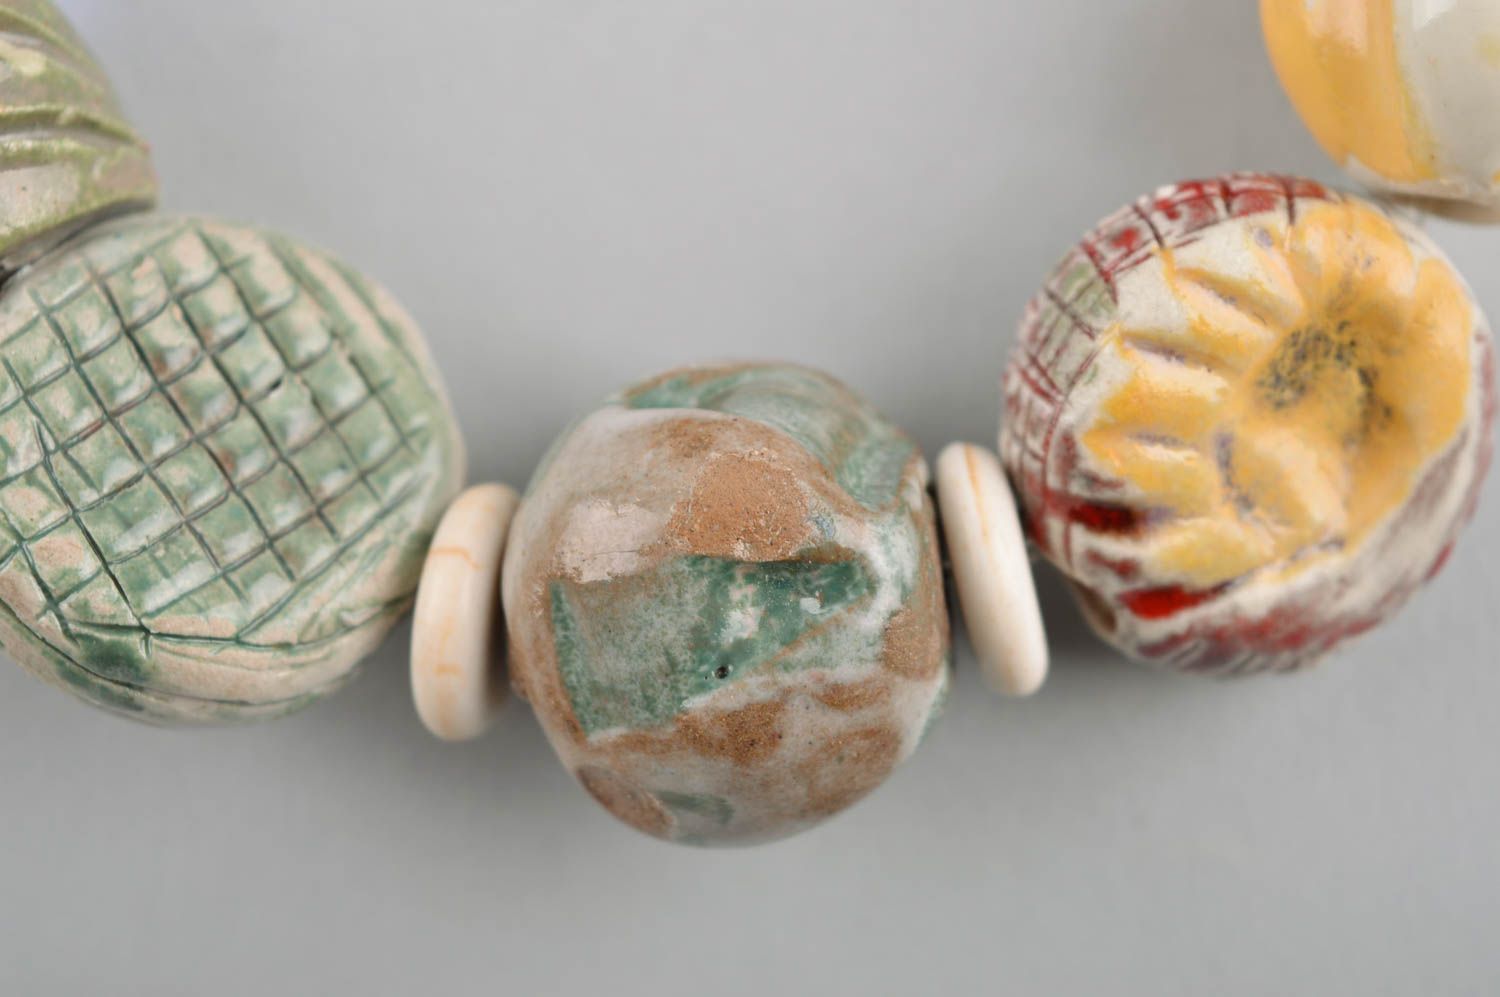 Beautiful handmade ceramic bracelet fashion accessories pottery works ideas photo 4